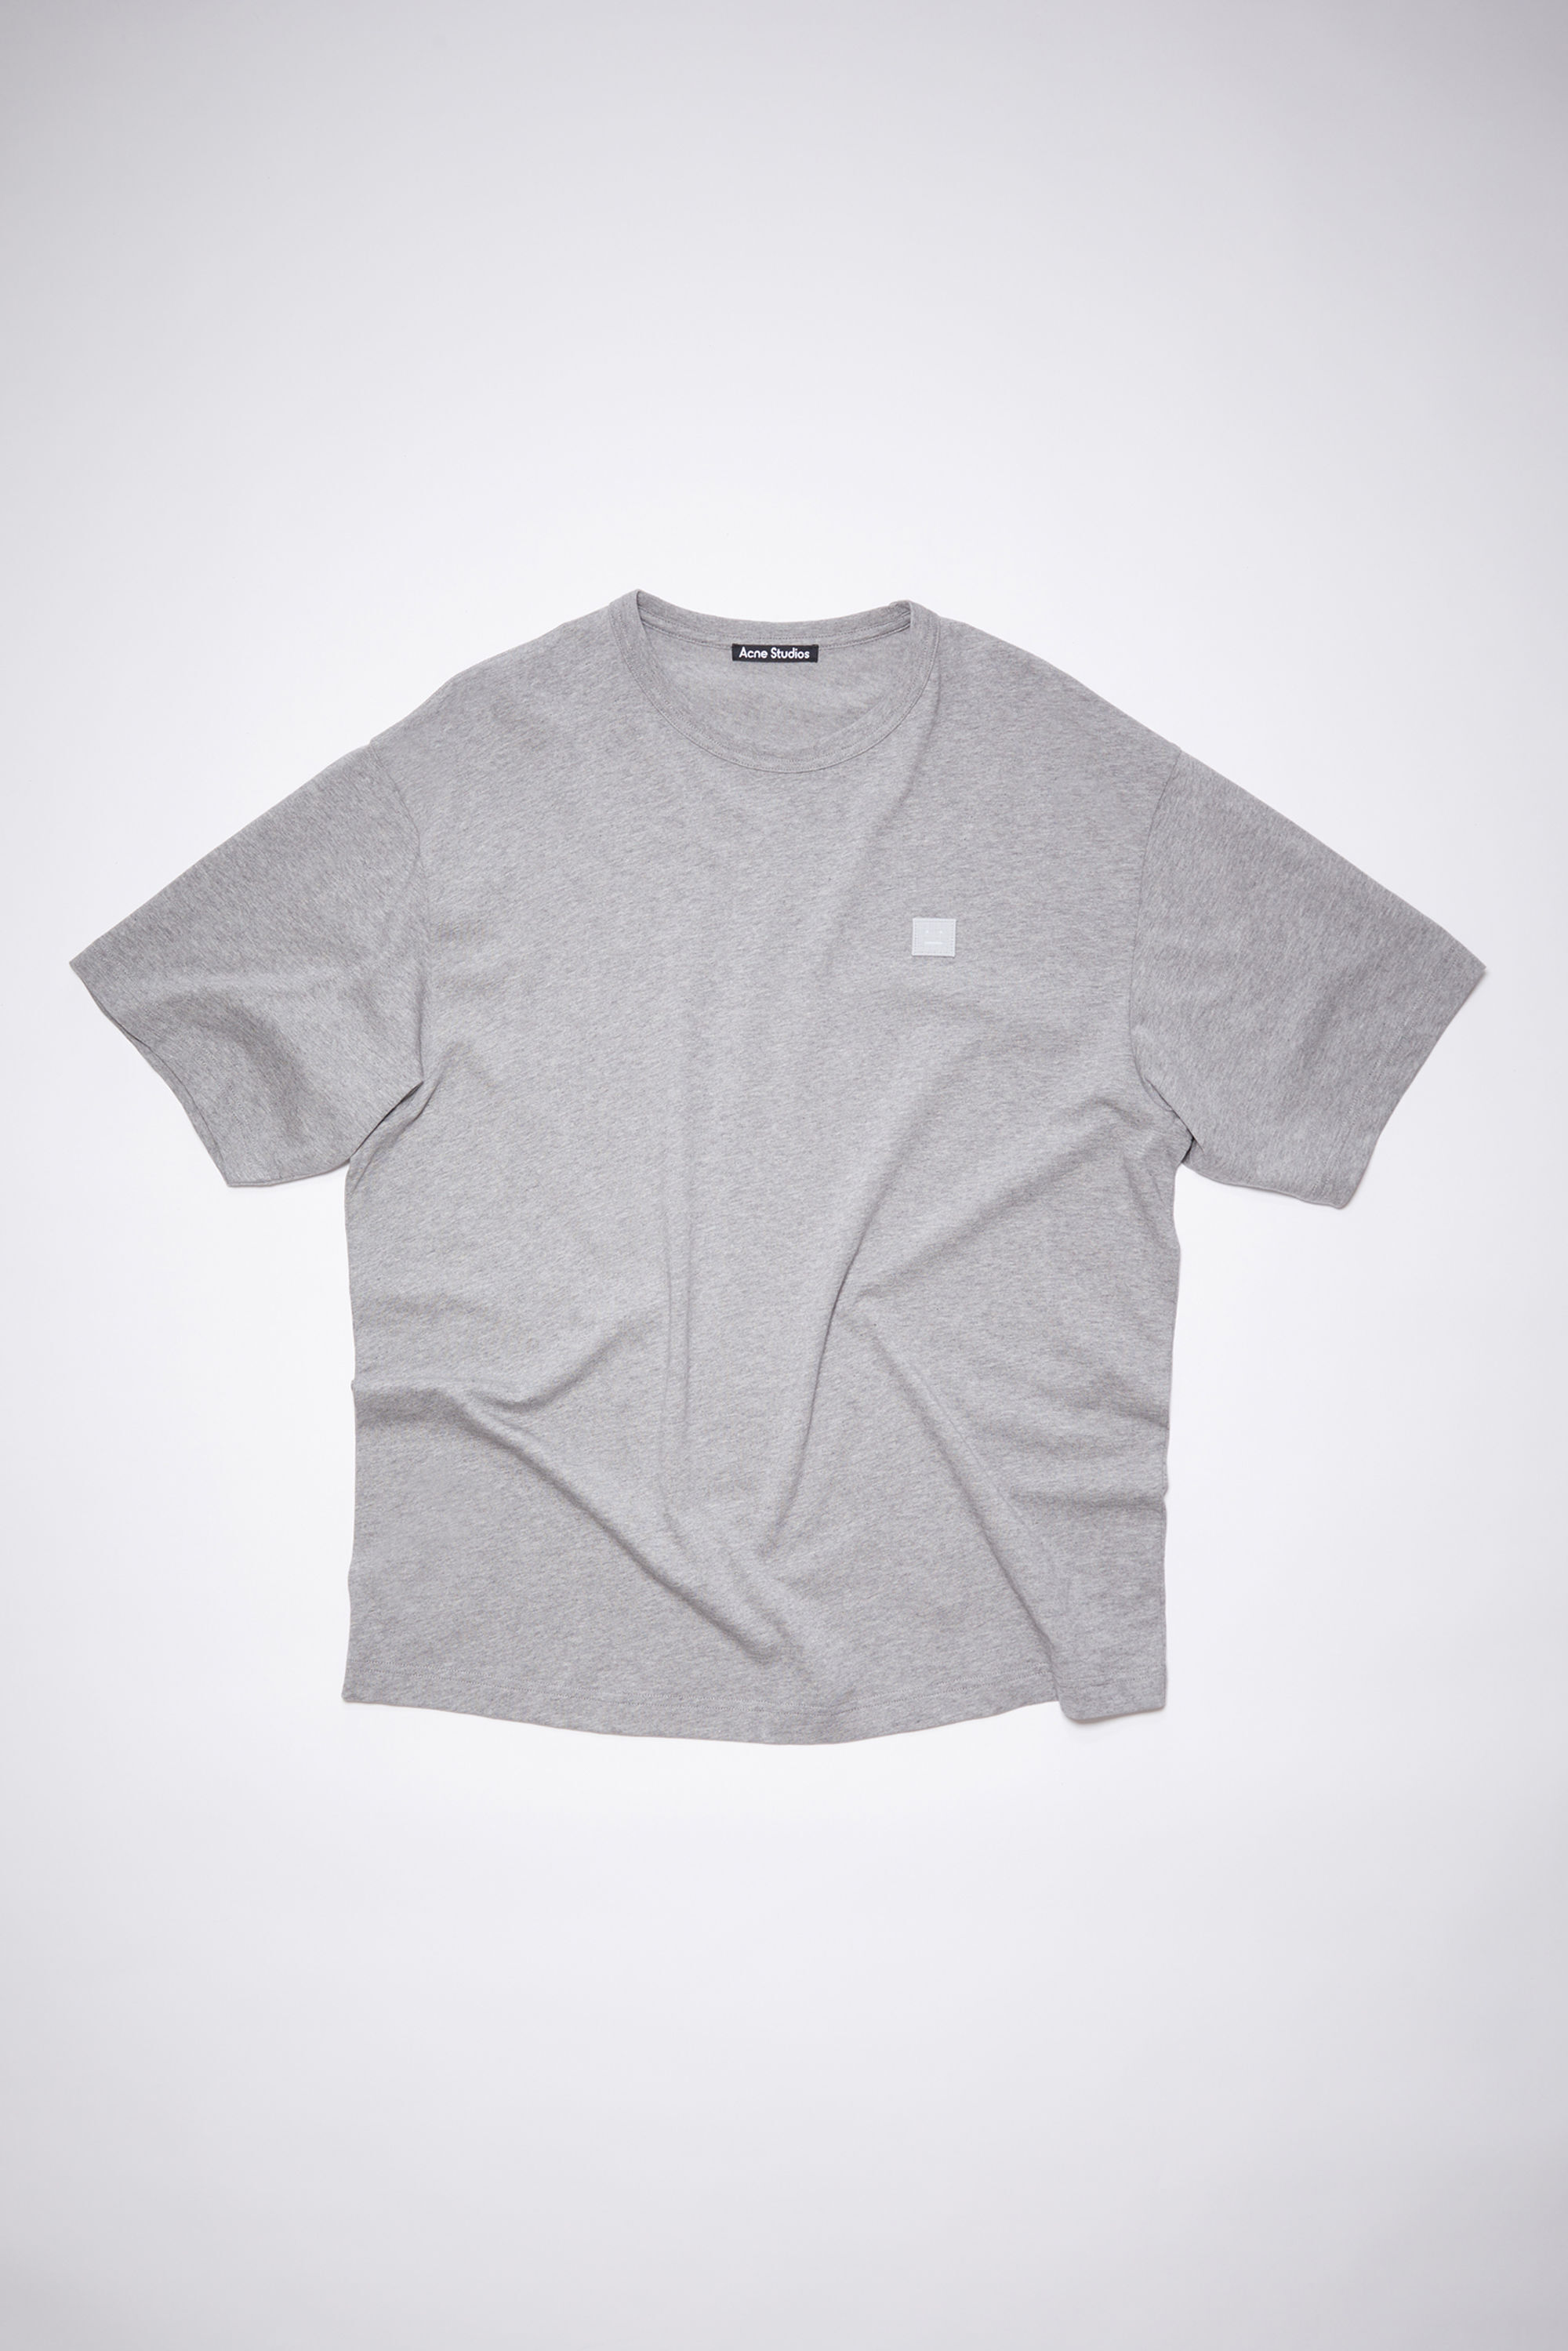 Acne Studios - Face logo patch t-shirt - Light Grey Melange